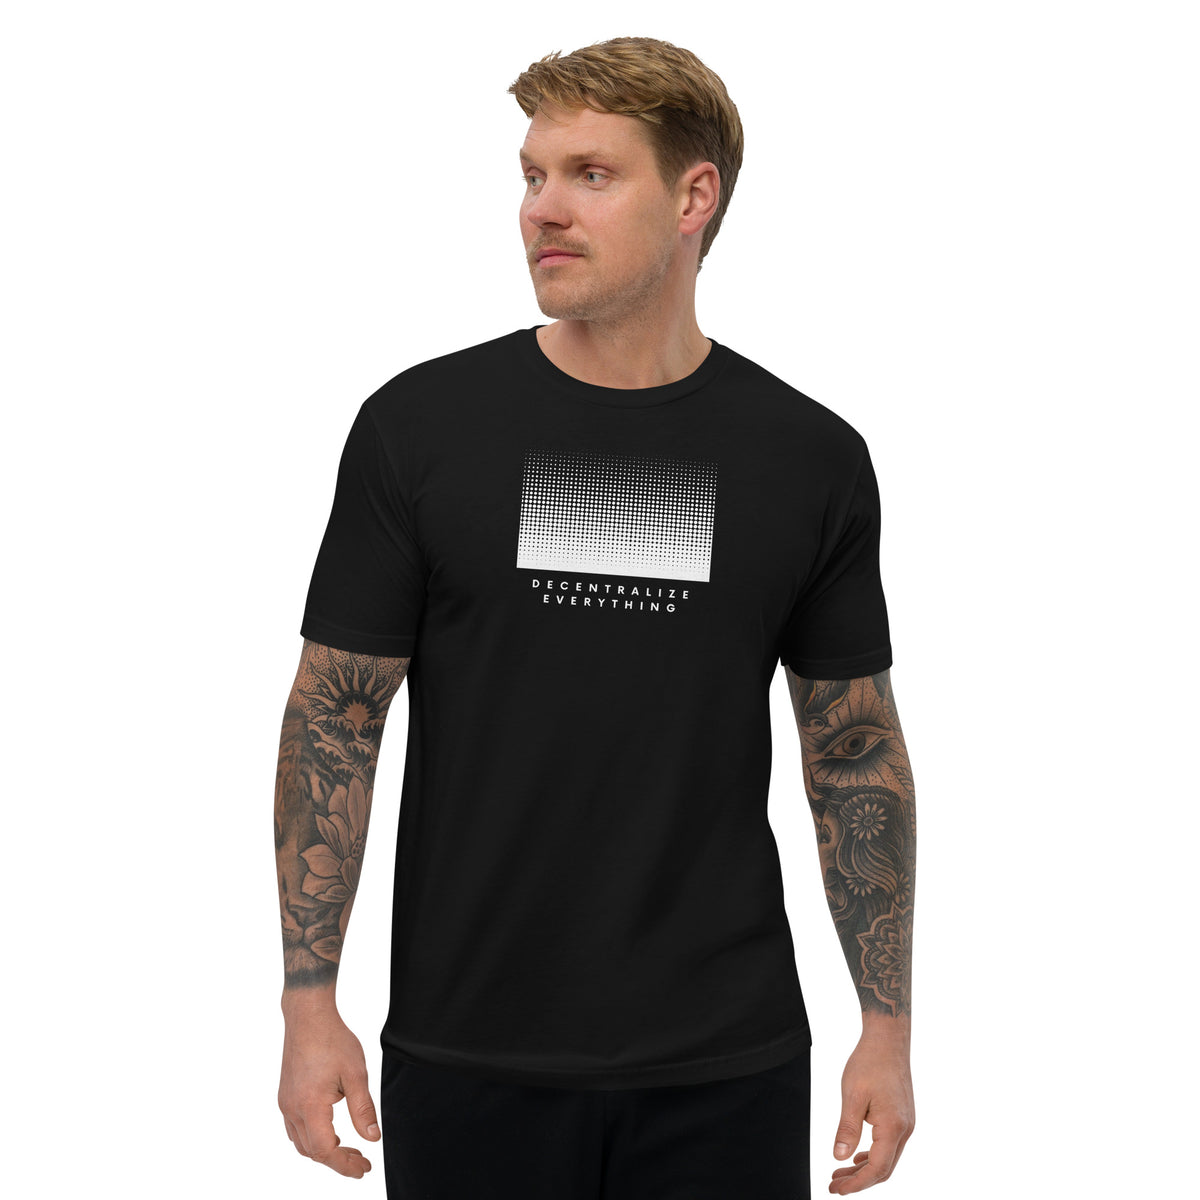 Men's Decentralize Everything | Short Sleeve T-shirt